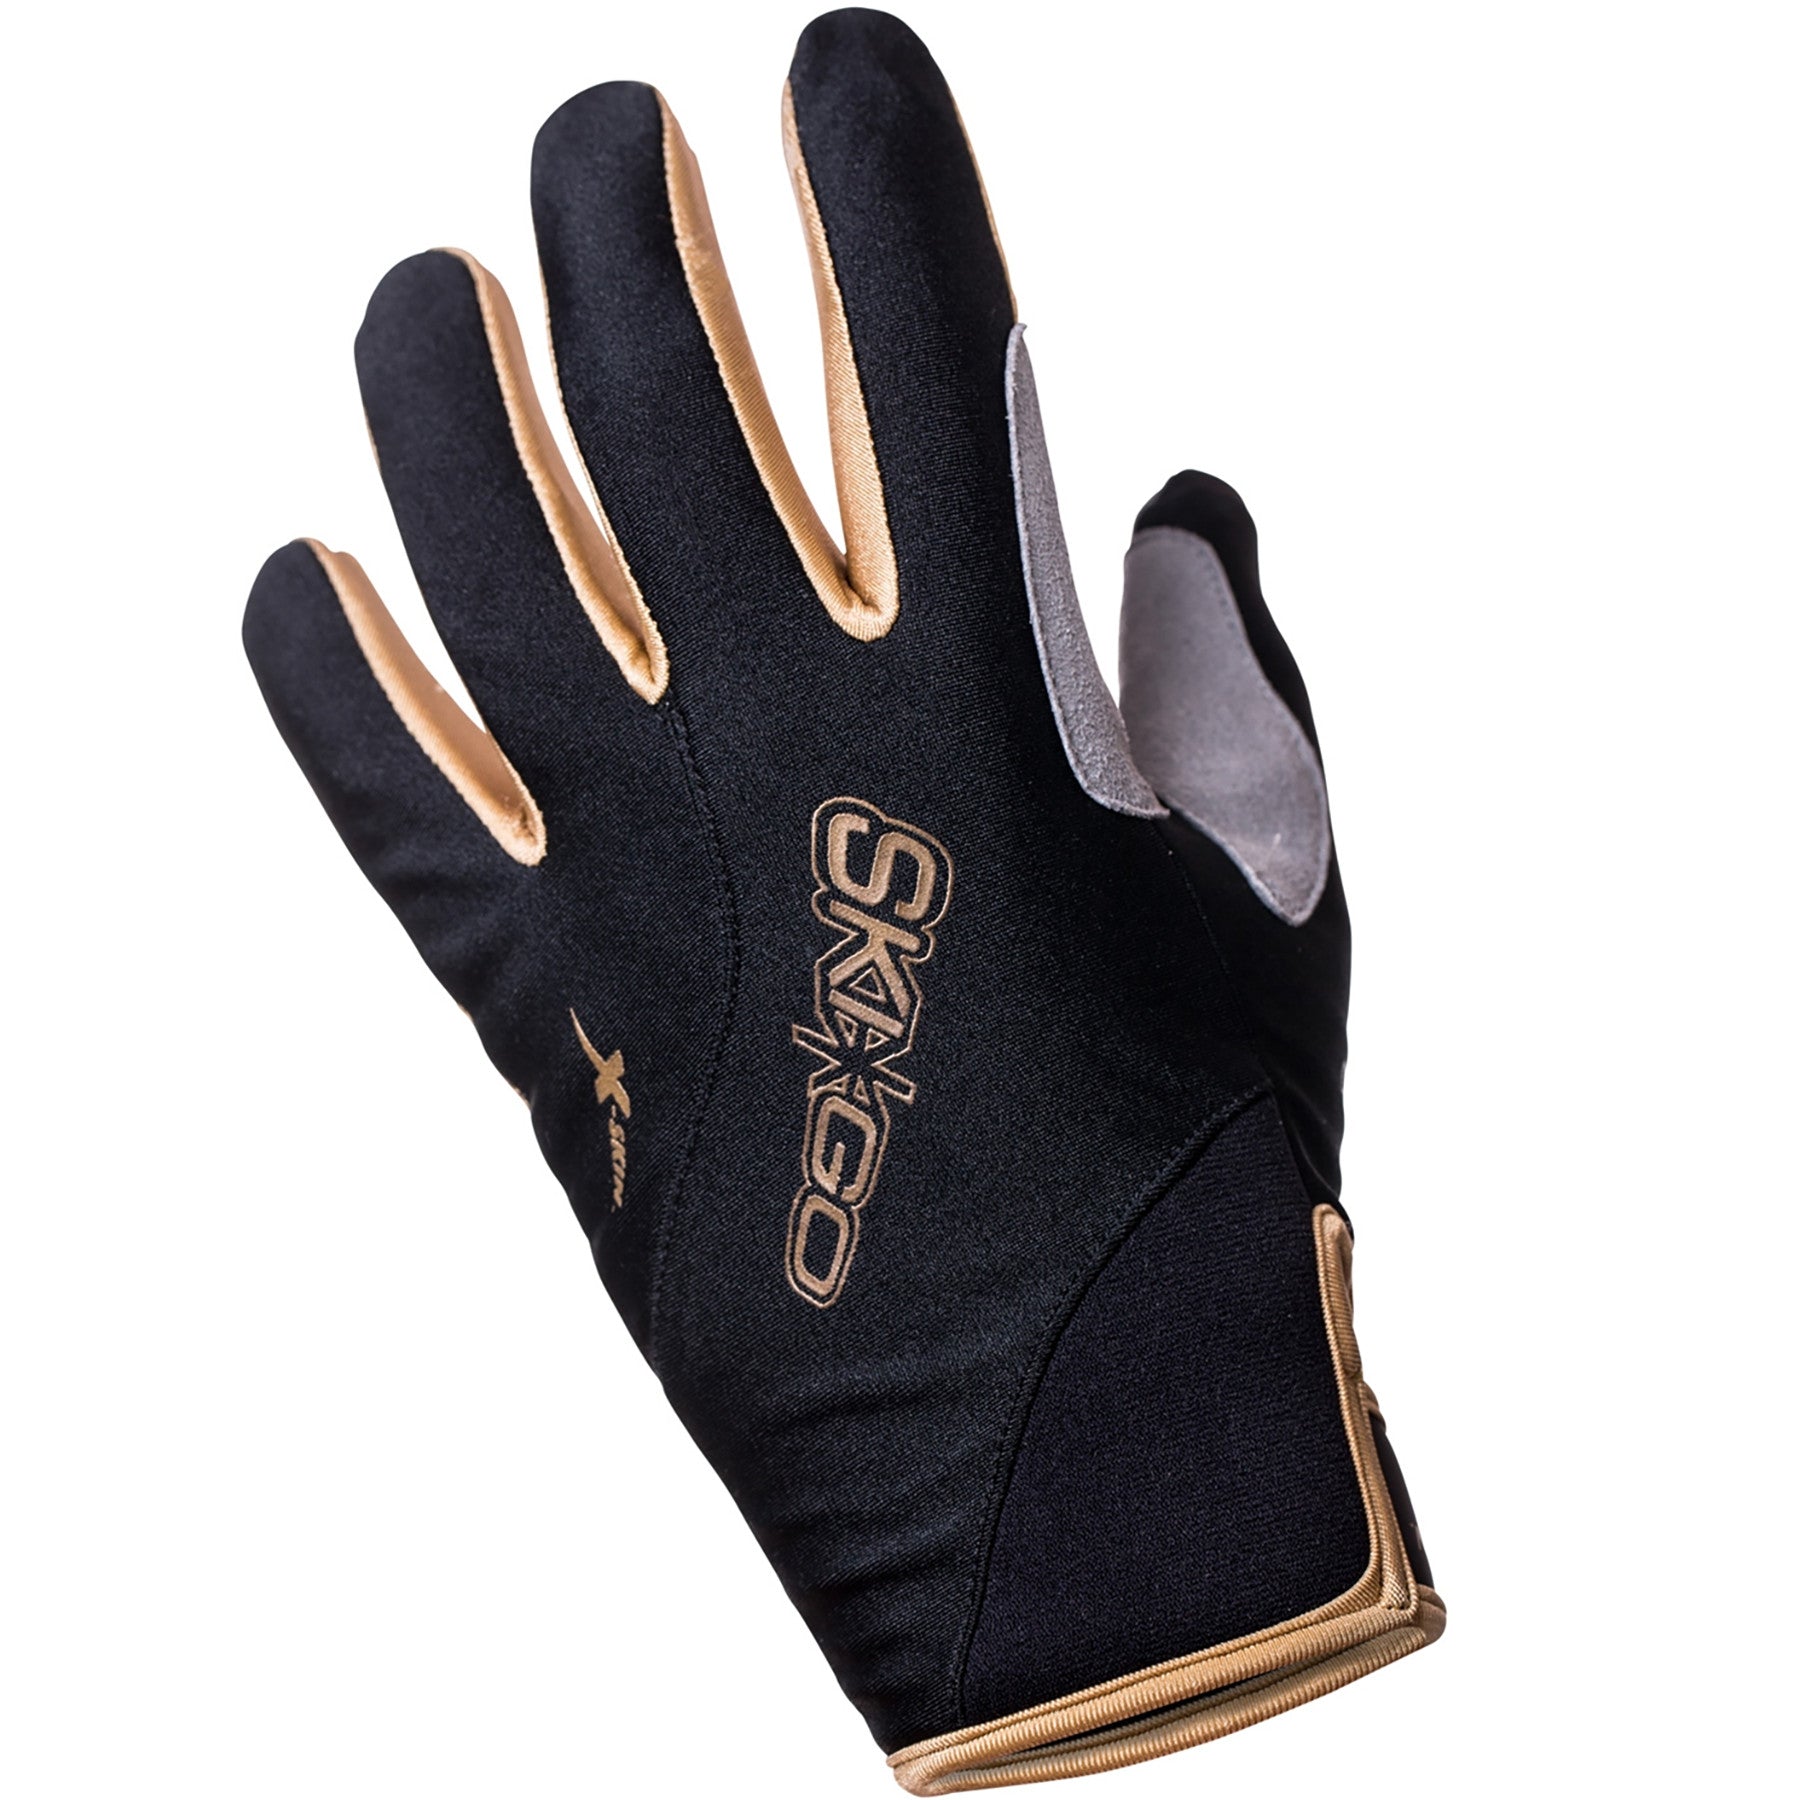 Skigo X-skin Glove 15-16-2